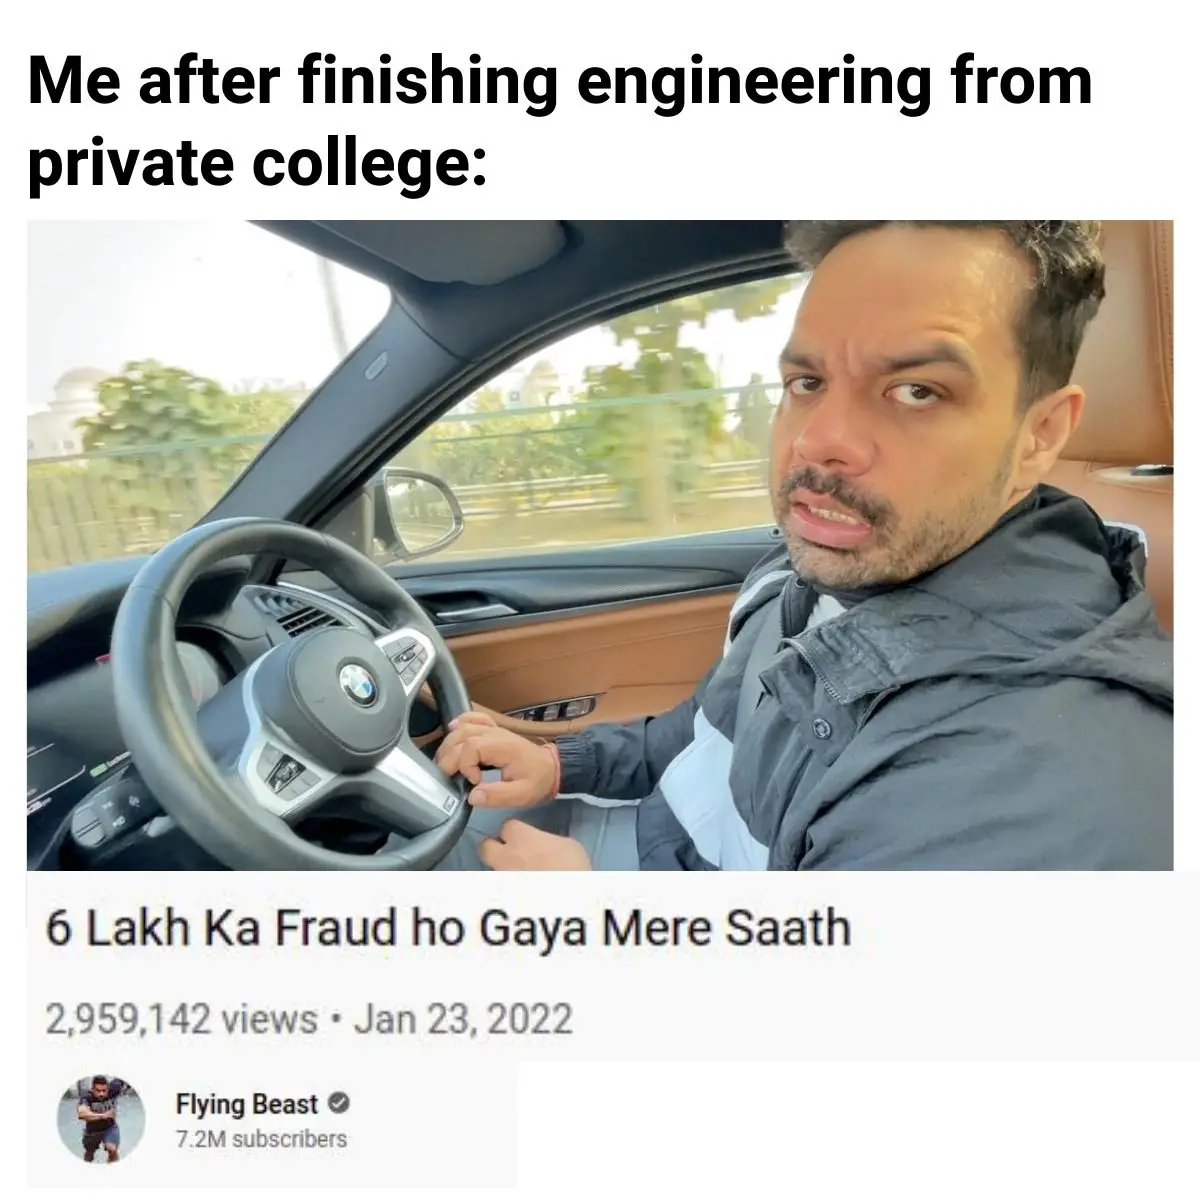 6 lakh ka fraud ho gaya mere sath meme on engineering college